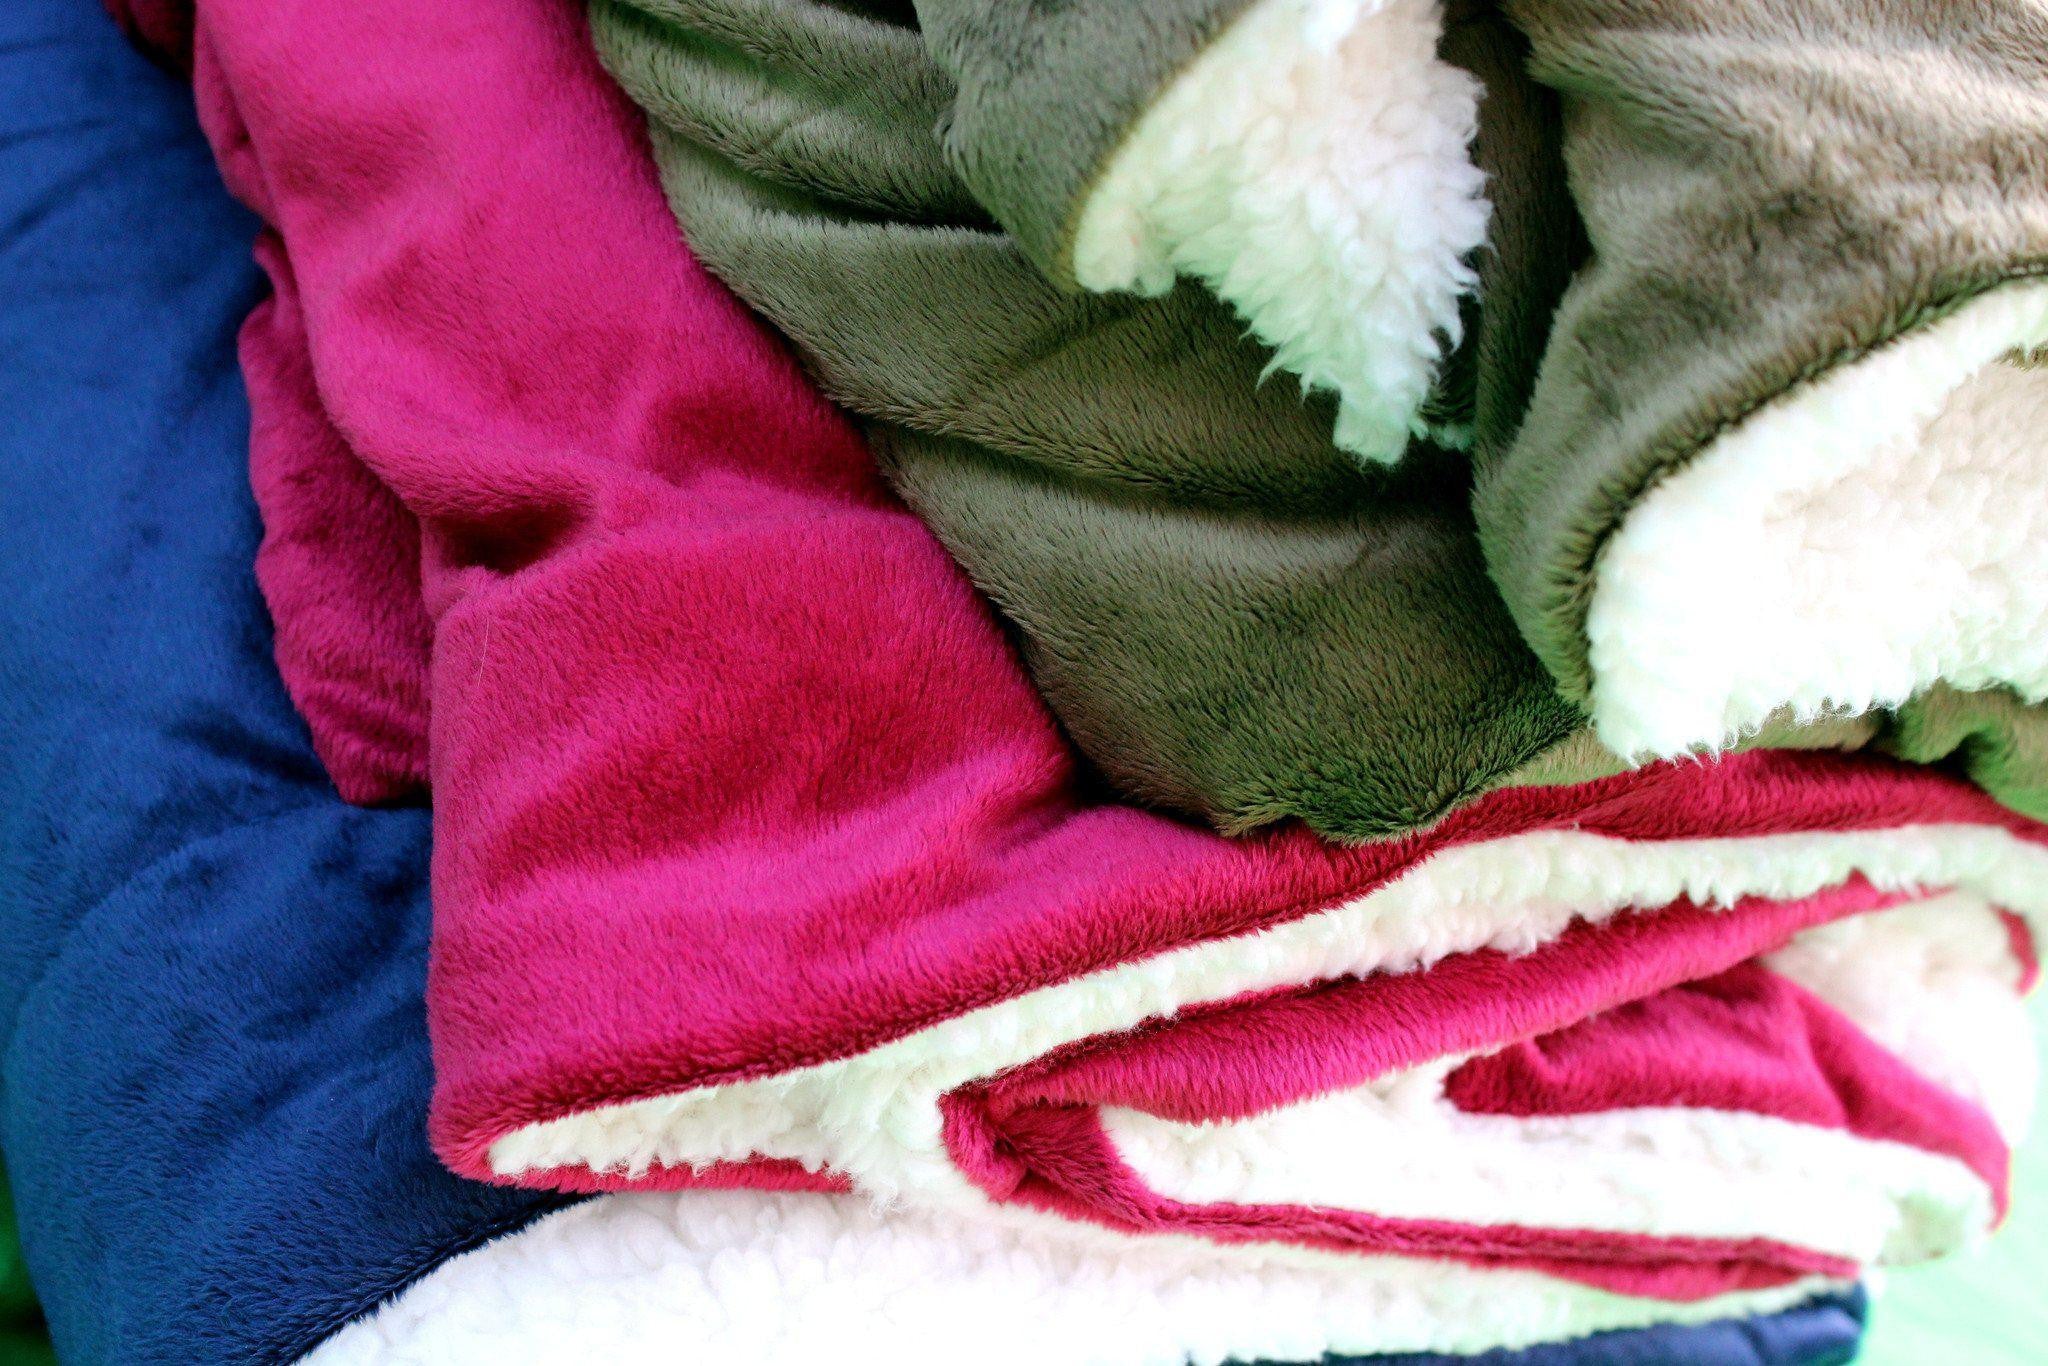 Tache Dark Navy Blue Sherpa Winter Night Micro Fleece Throw Blanket (SMF5060BL) - Tache Home Fashion